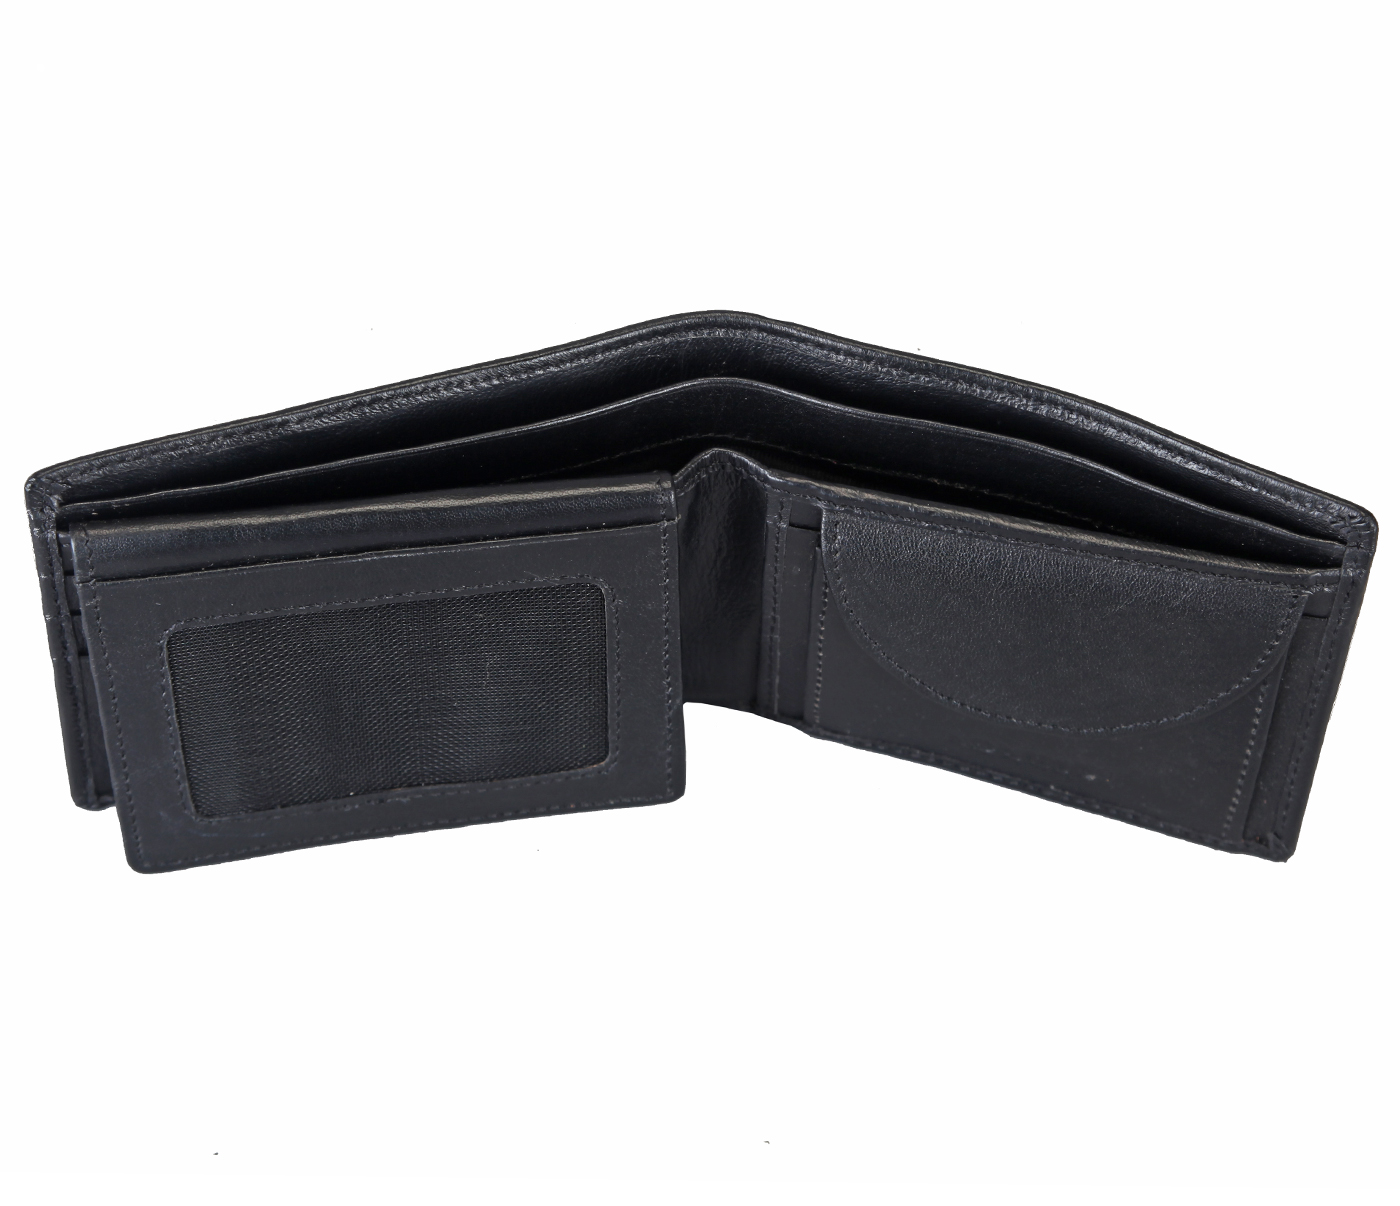 Wallet-Hudson-Men's bifold wallet with coin pocket in Genuine Leather - Black